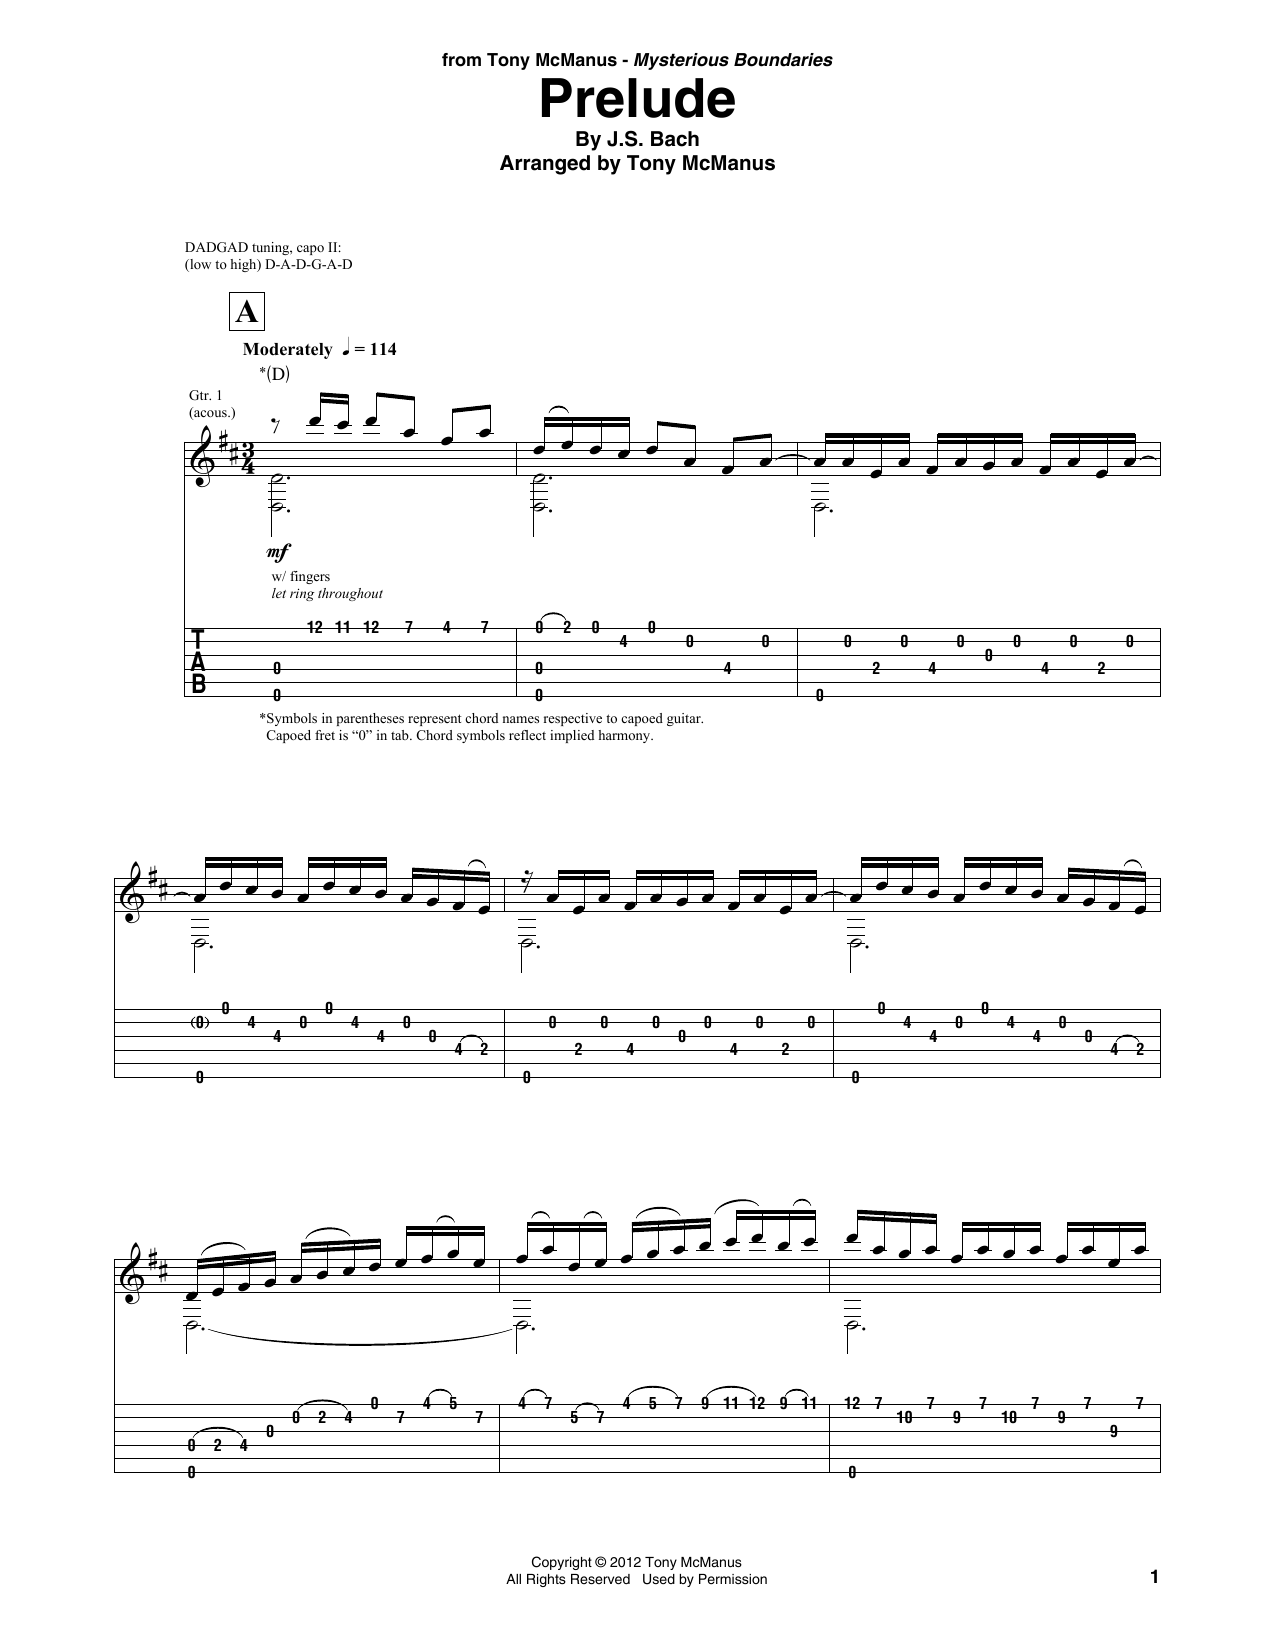 Johann Sebastian Bach Prelude (arr. Tony McManus) Sheet Music Notes & Chords for Solo Guitar Tab - Download or Print PDF